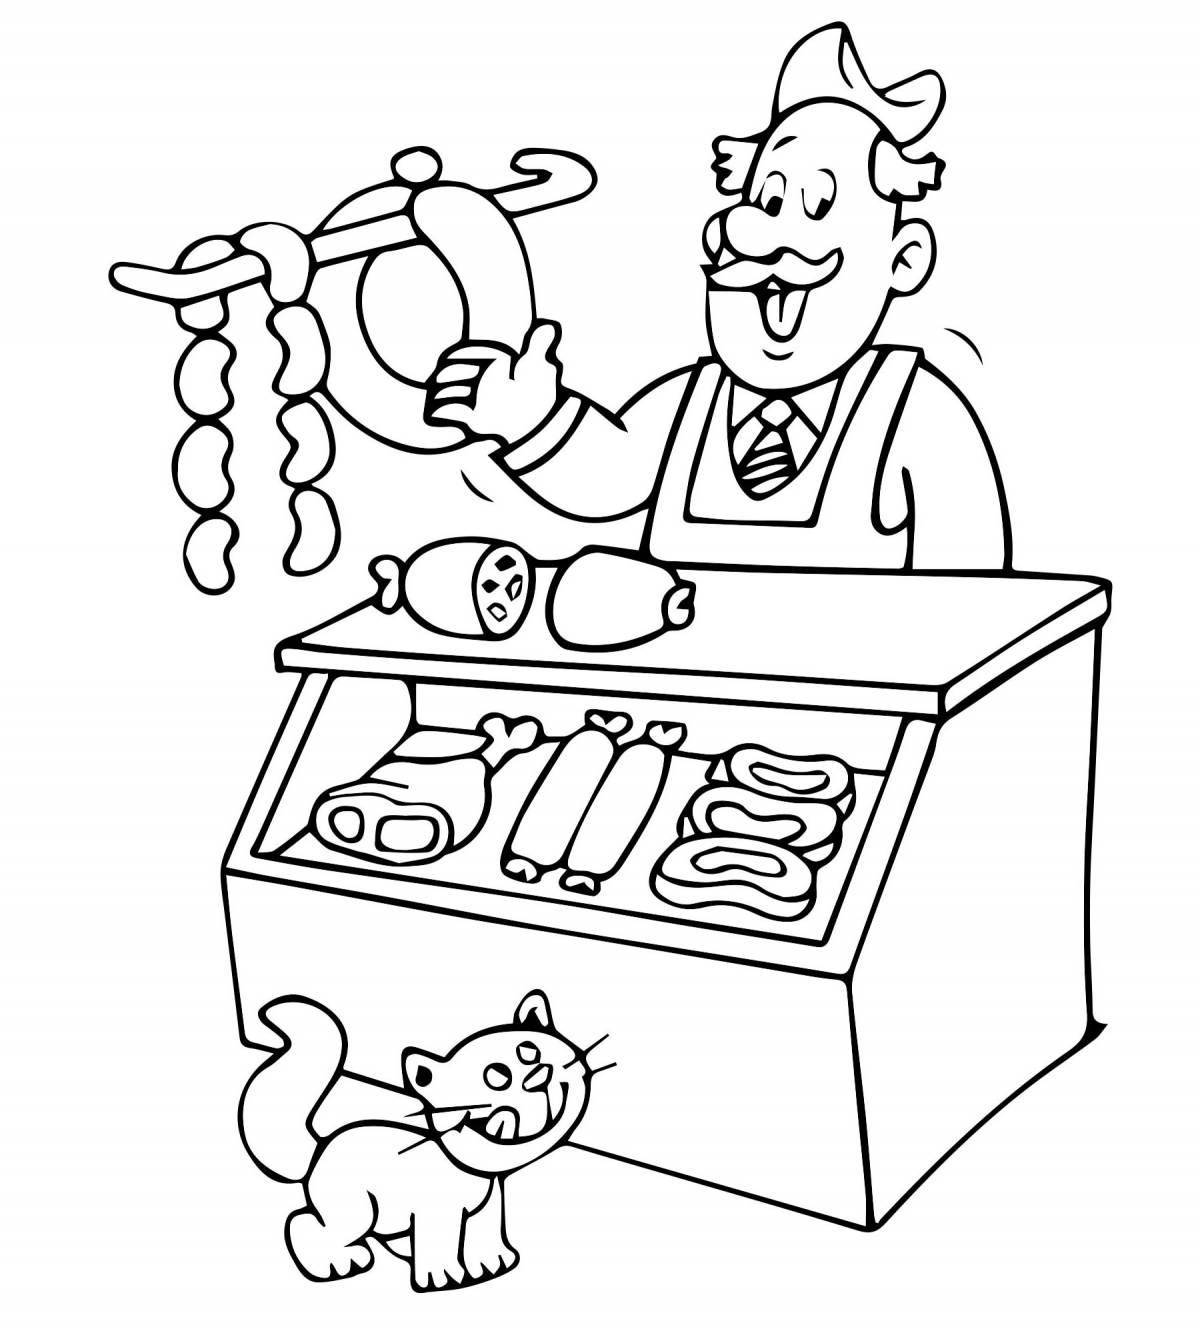 Gourmet salesman coloring page